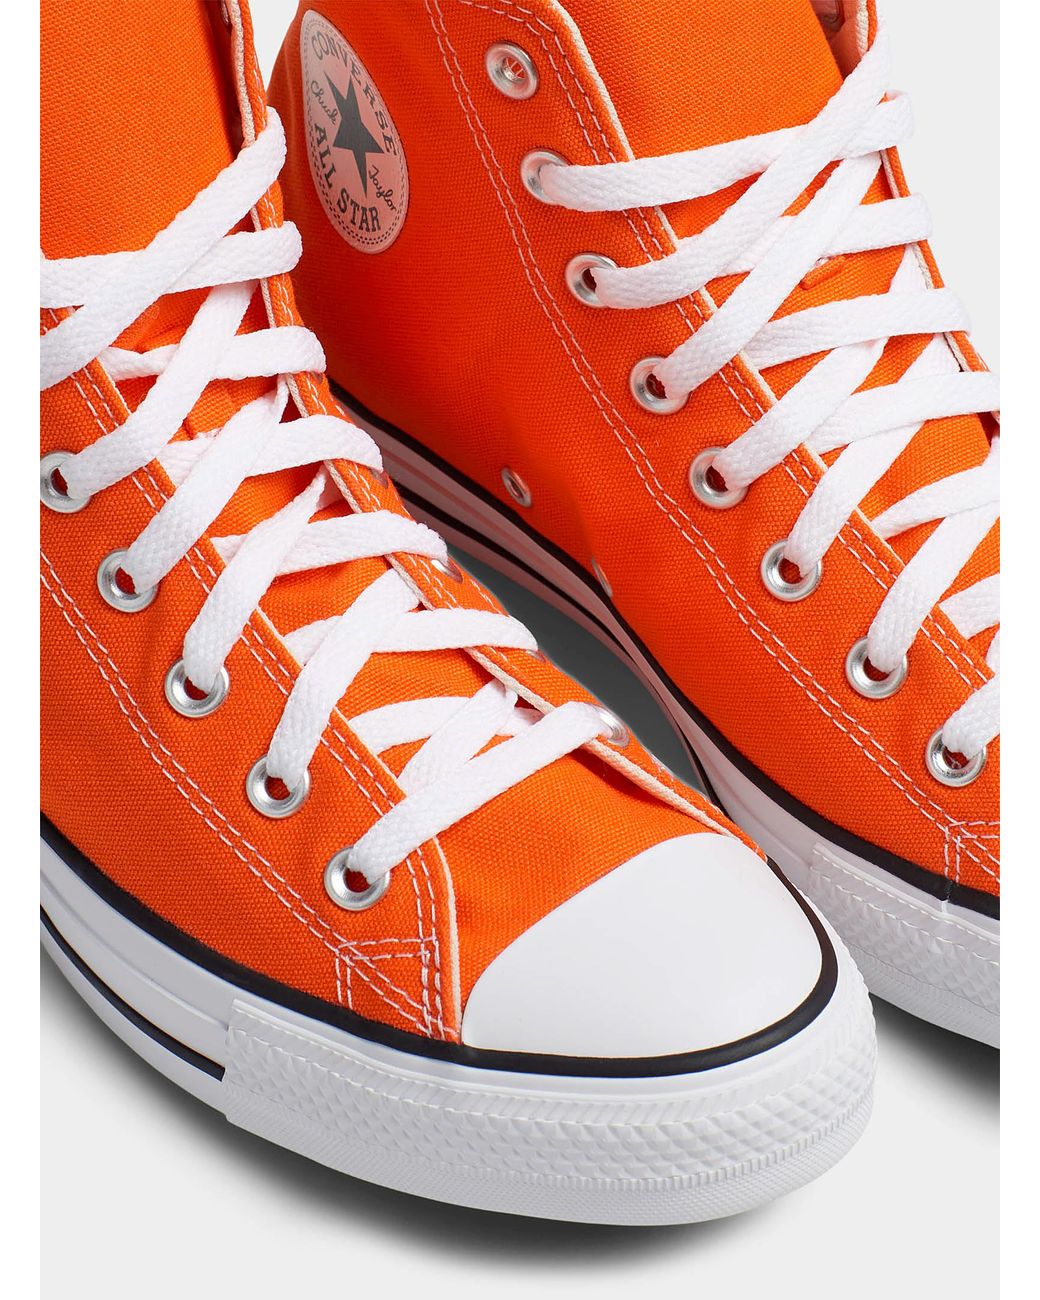 Buy Stylish Orange Sneakers Online | Trendy Footwear